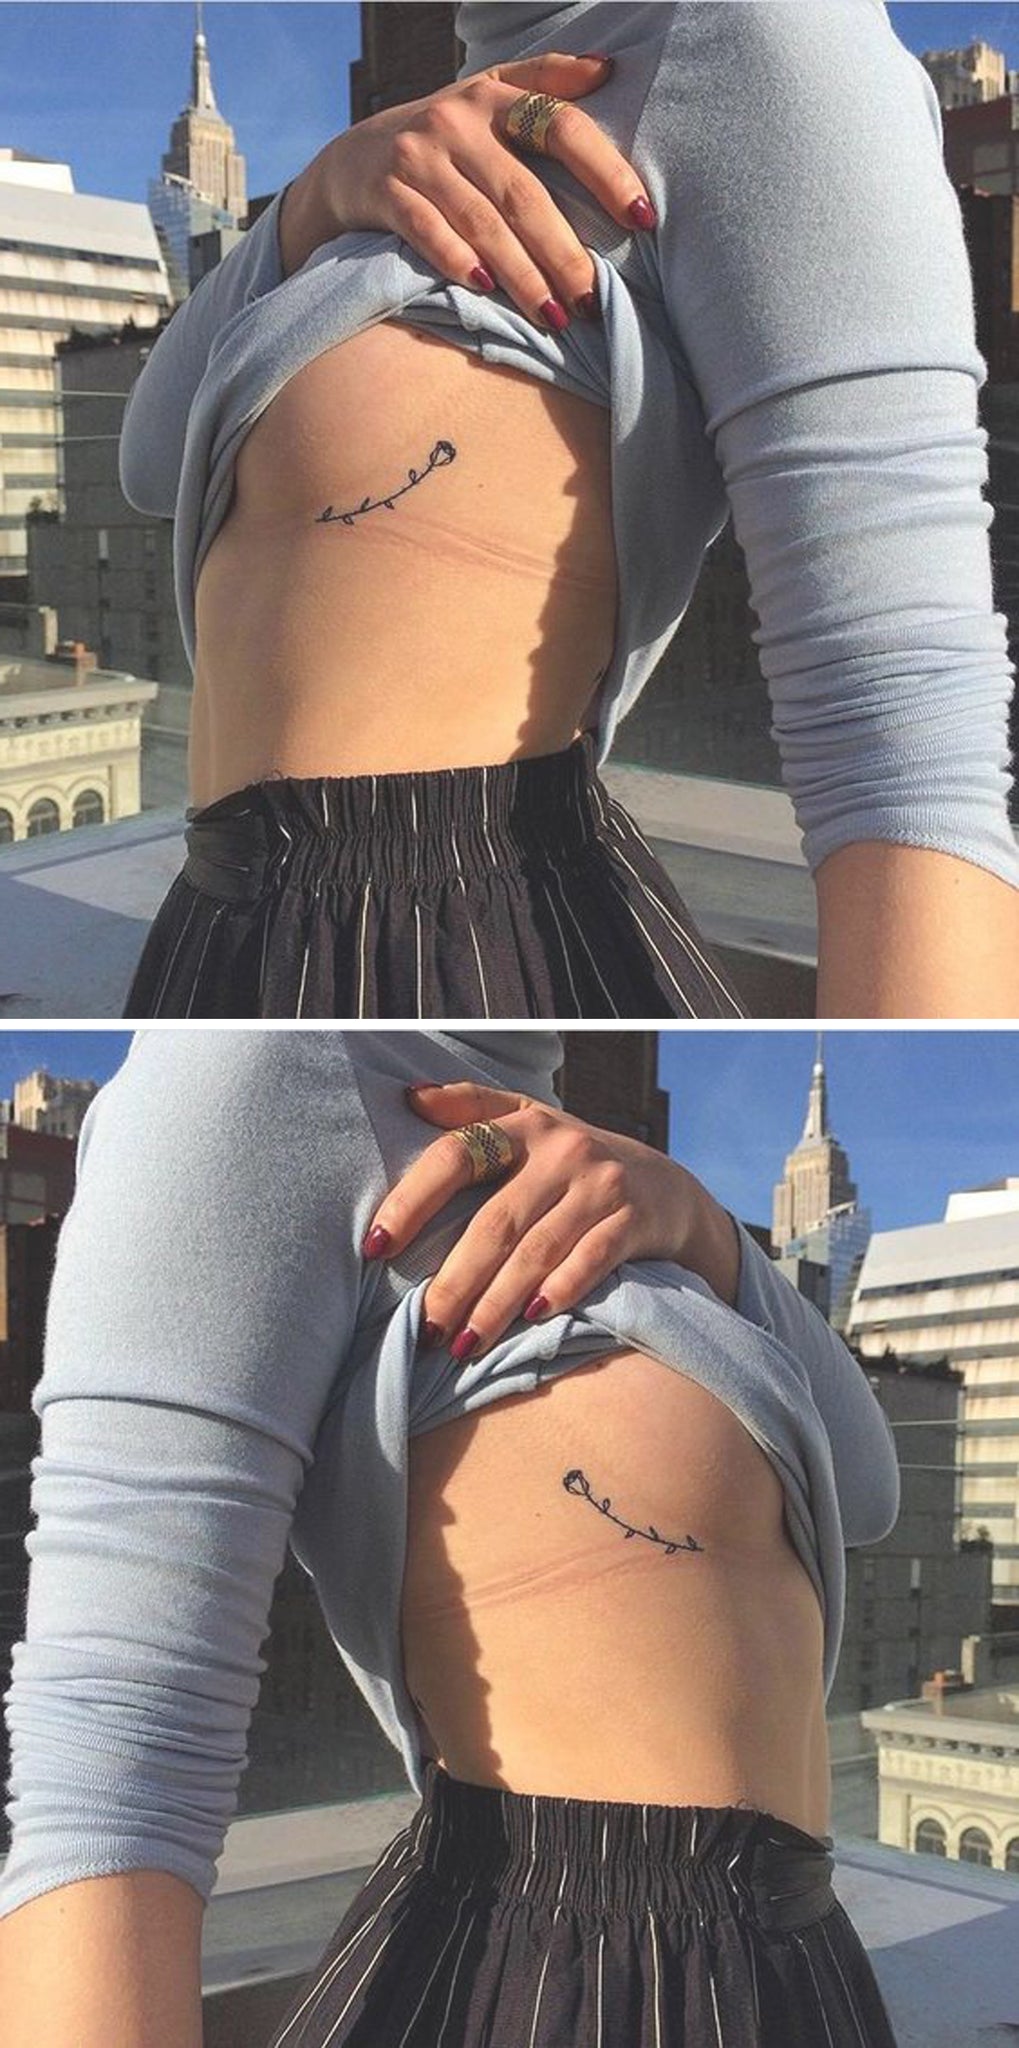 girl rib tattoos small